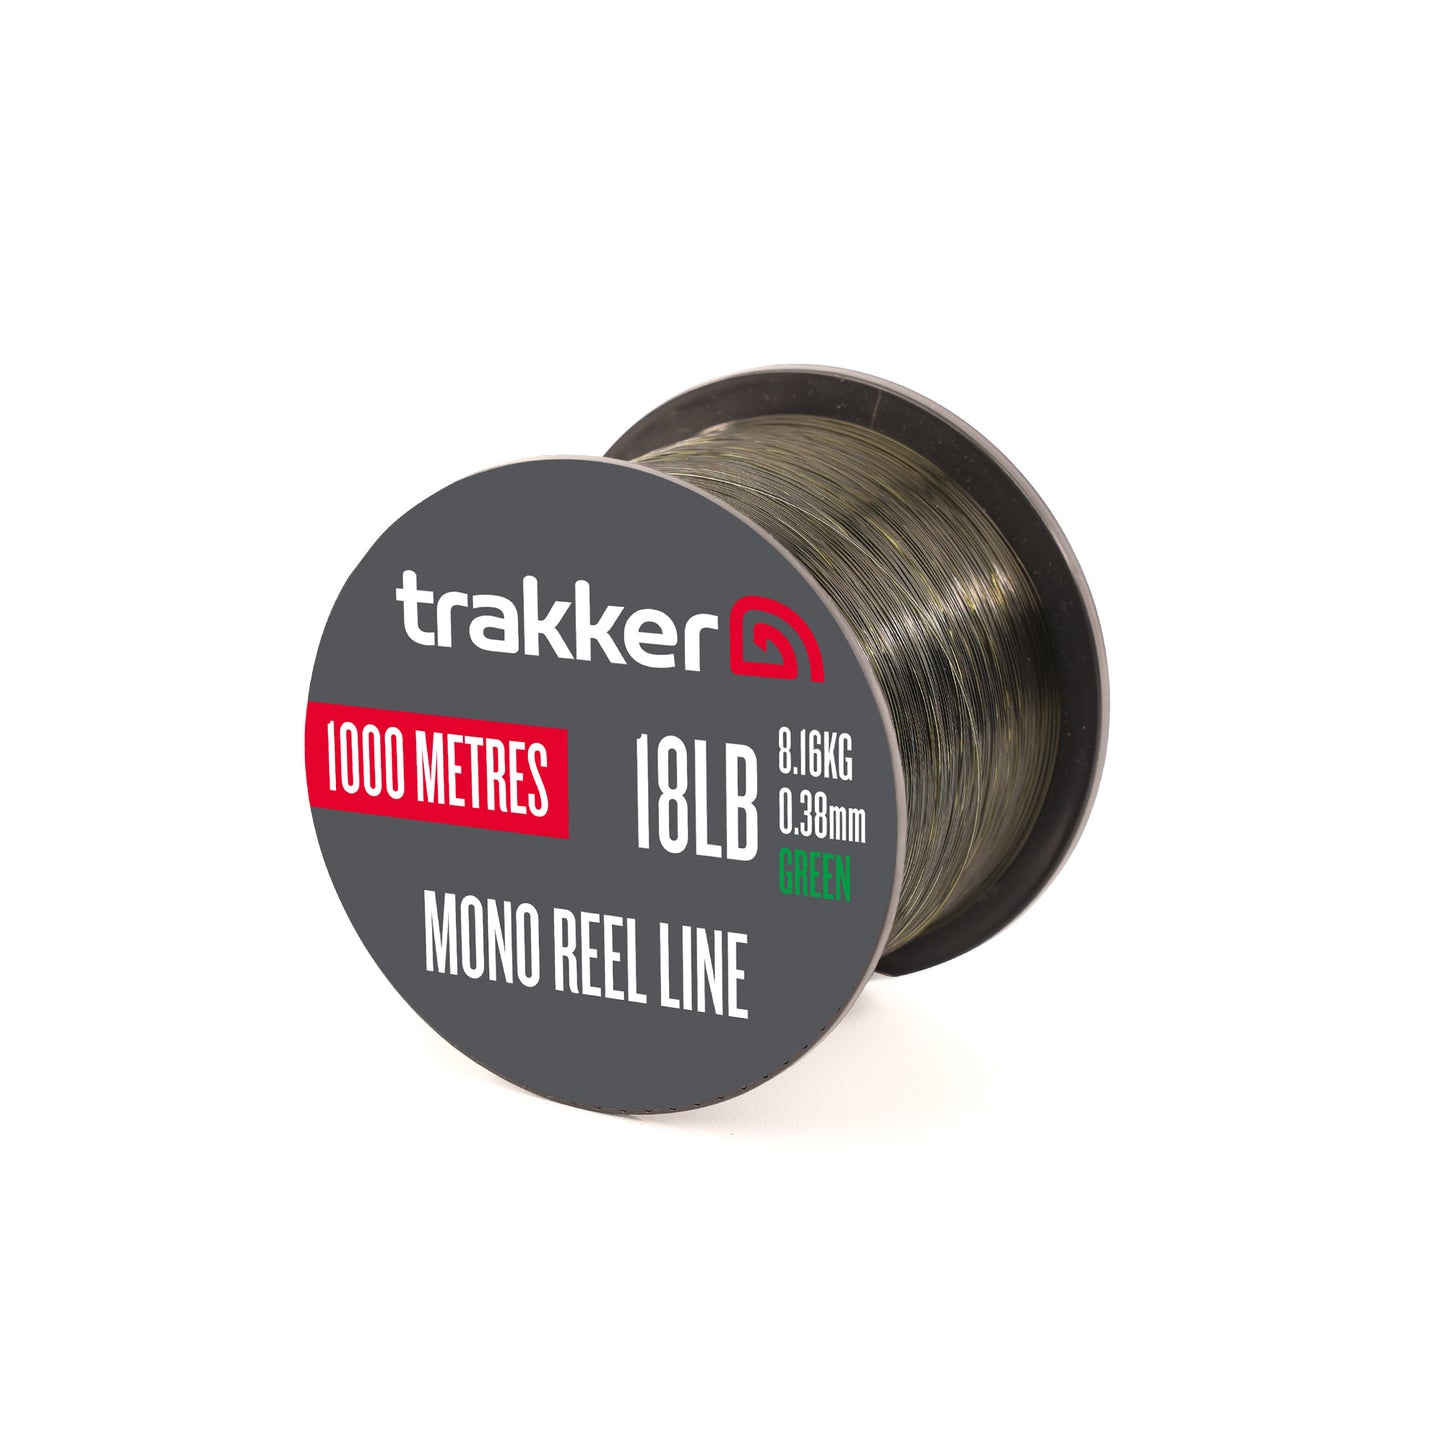 TRAKKER TRAKKER Mono Reel Line (1000m) TRAKKER Mono Reel Line (18lb)(8.16kg)(0.38mm)(1000m) - Parkfield Angling Centre